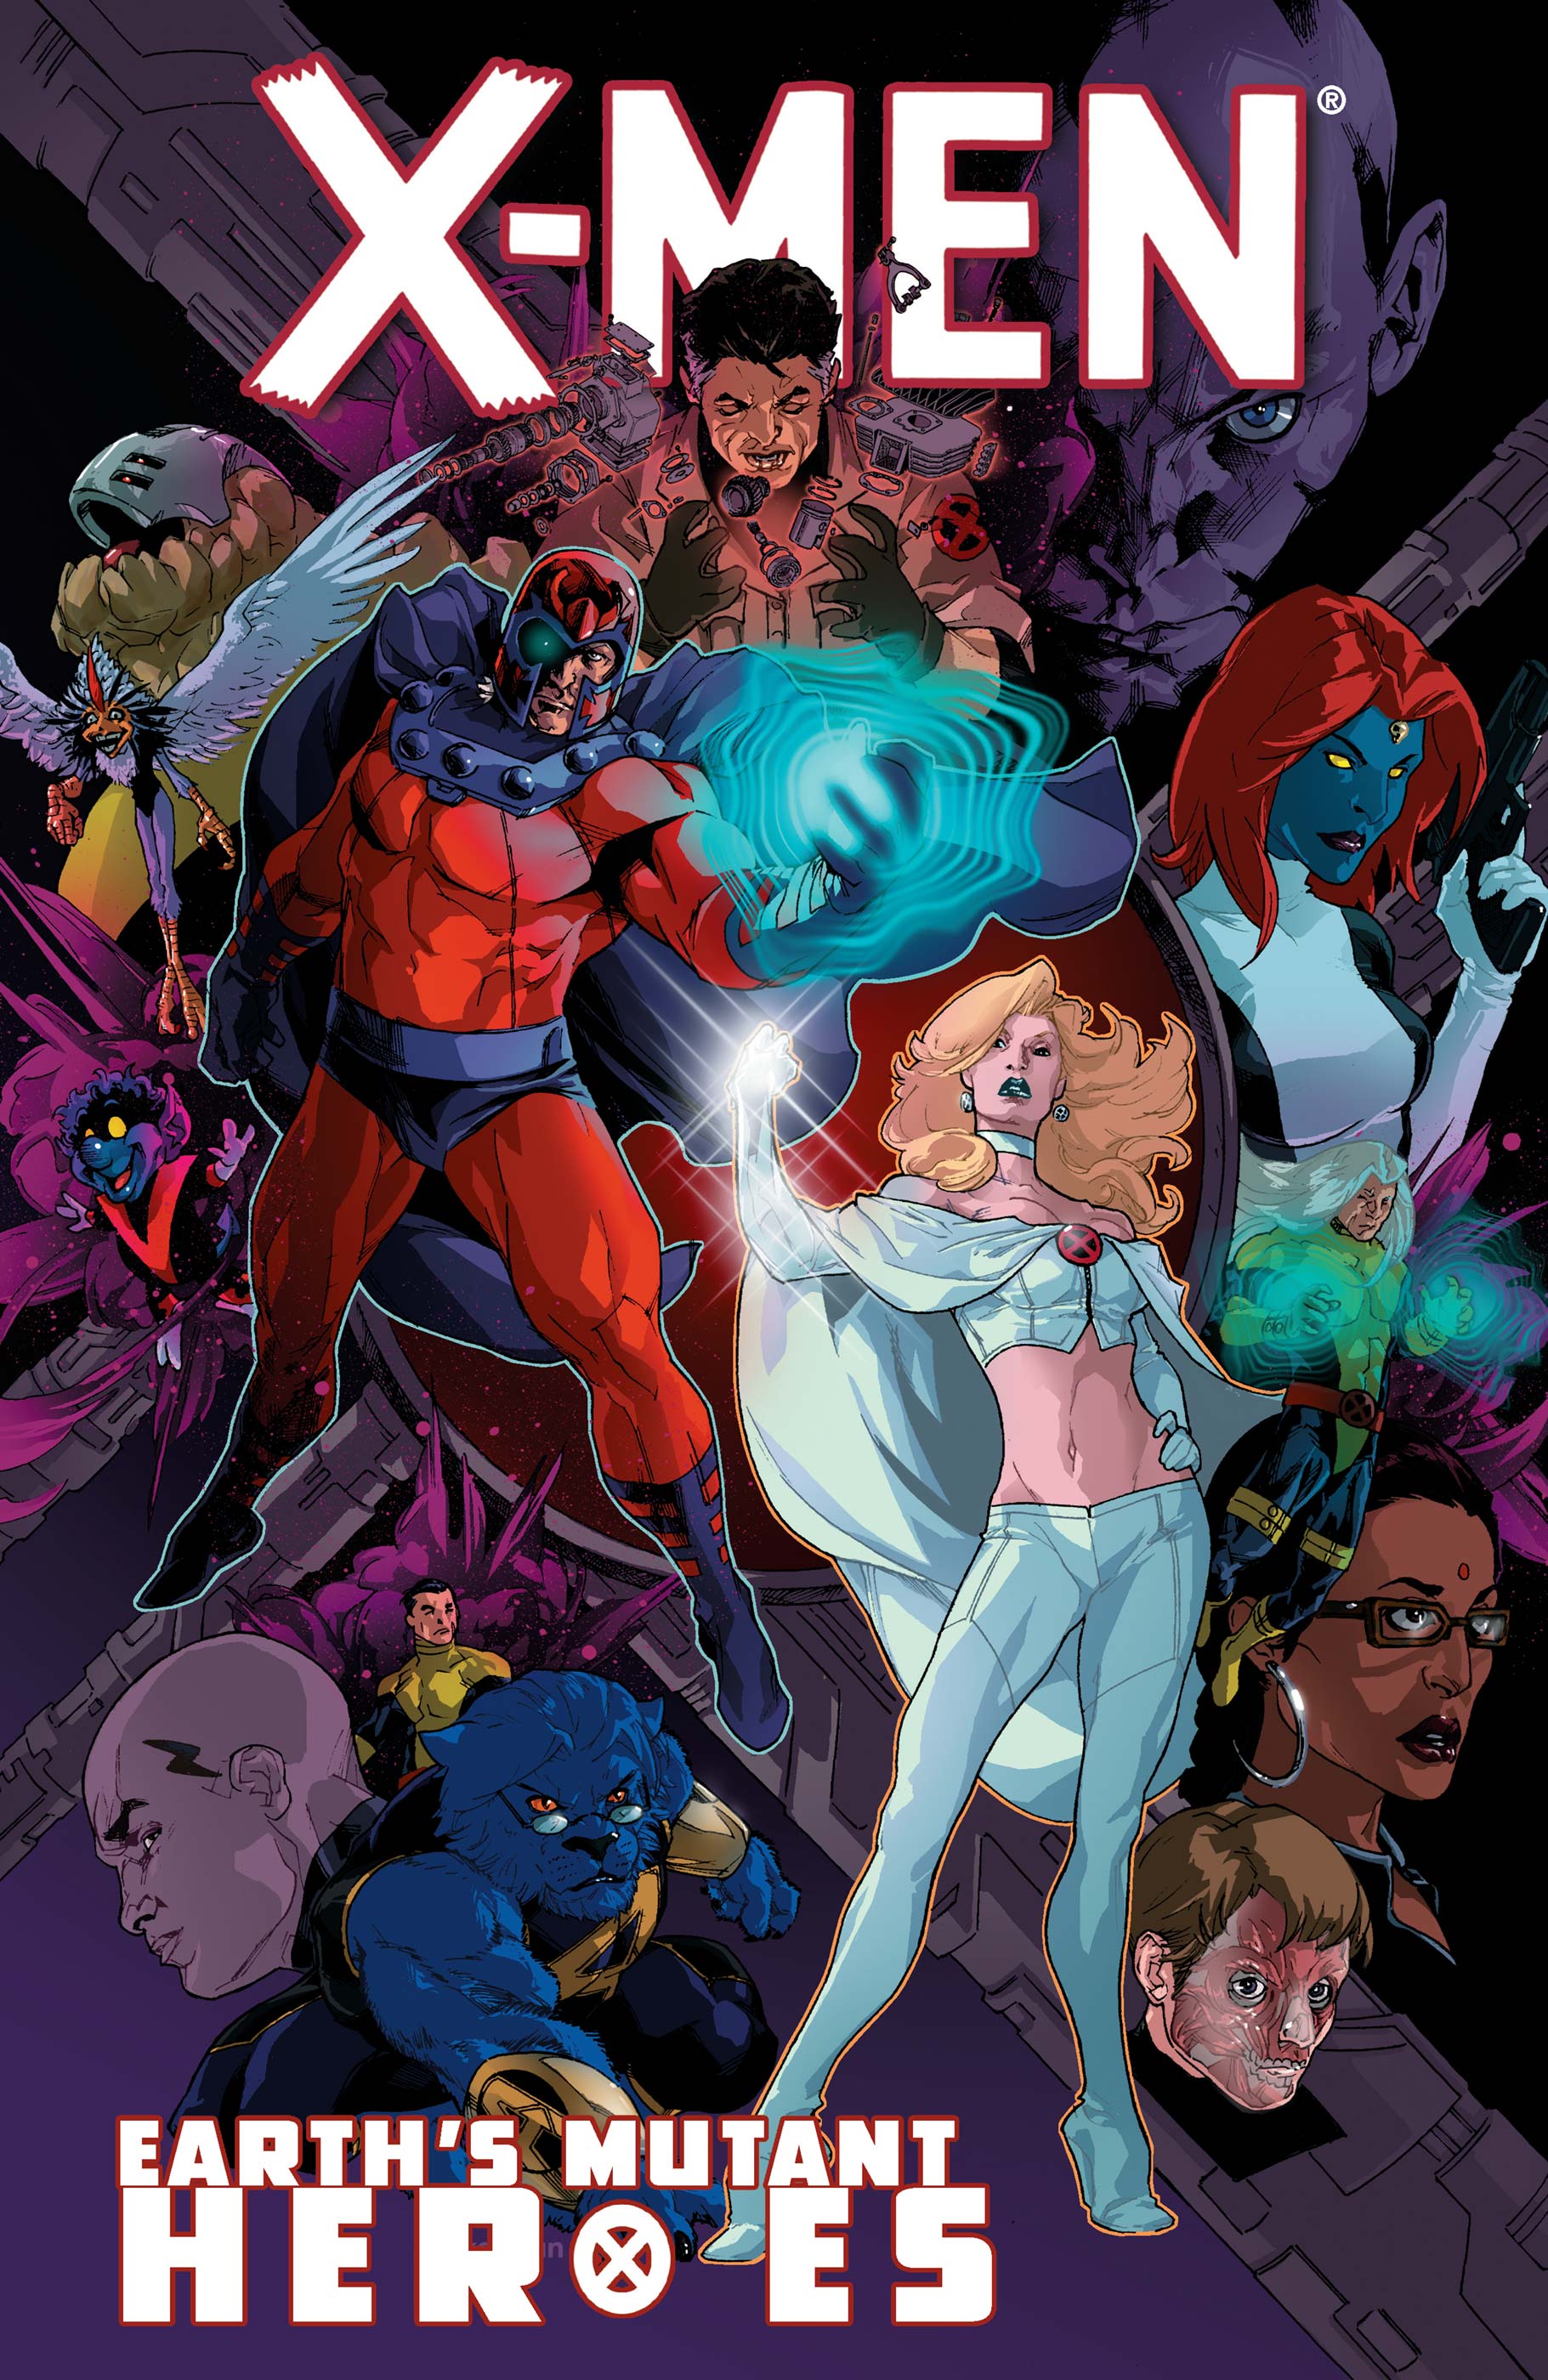 X-Men: Earth's Mutant Heroes (2010) #1